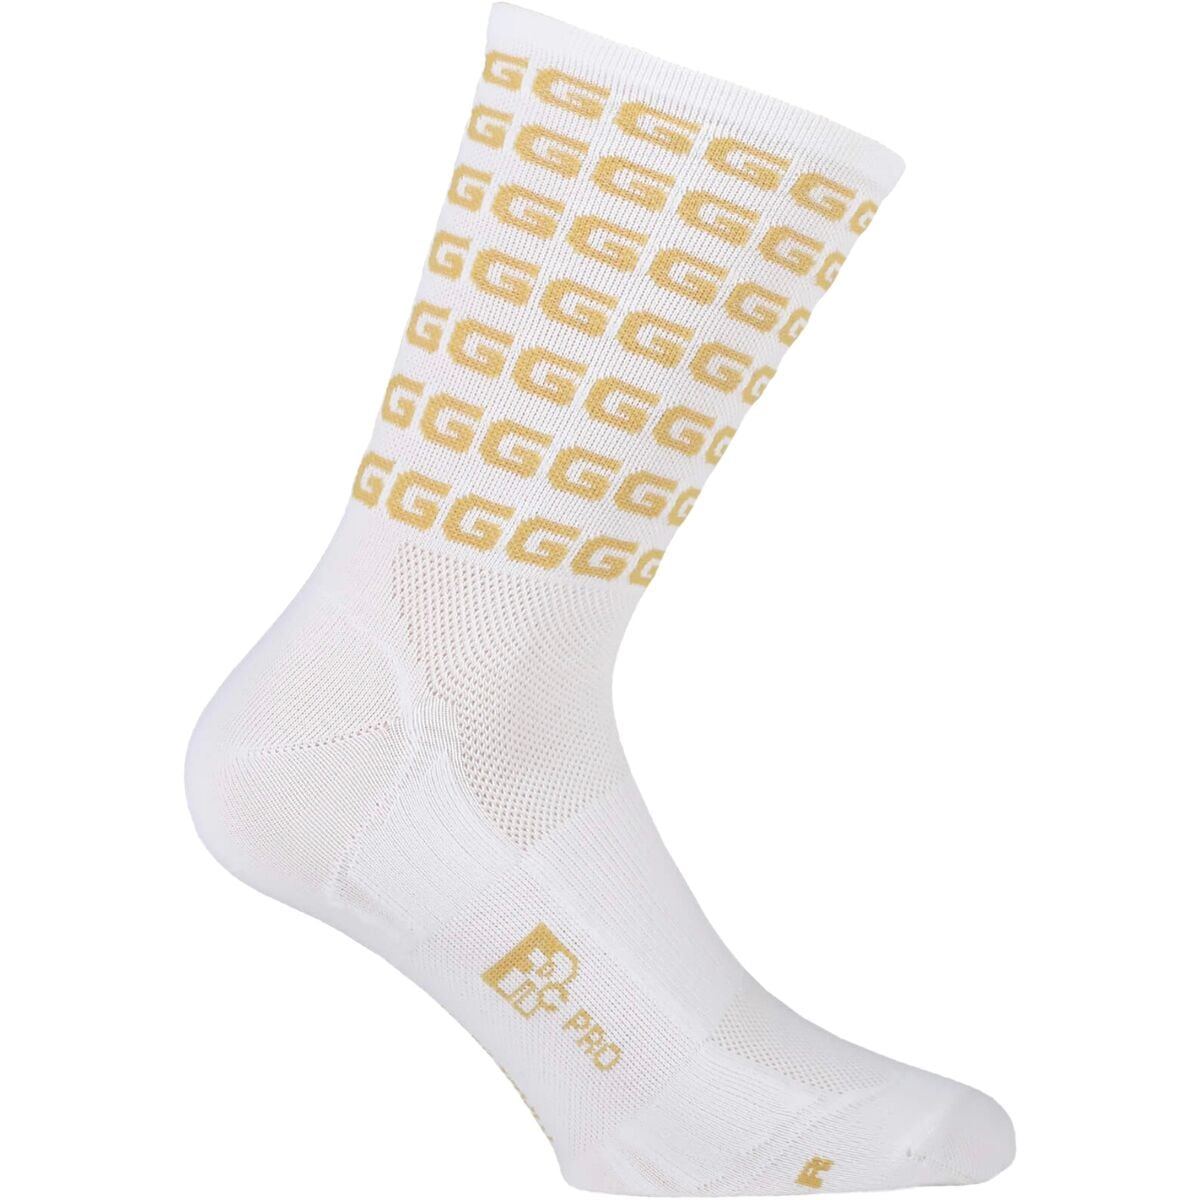 Giordana FR-C Pro G Tall Cuff Sock White/Gold, 45-48 - Men's